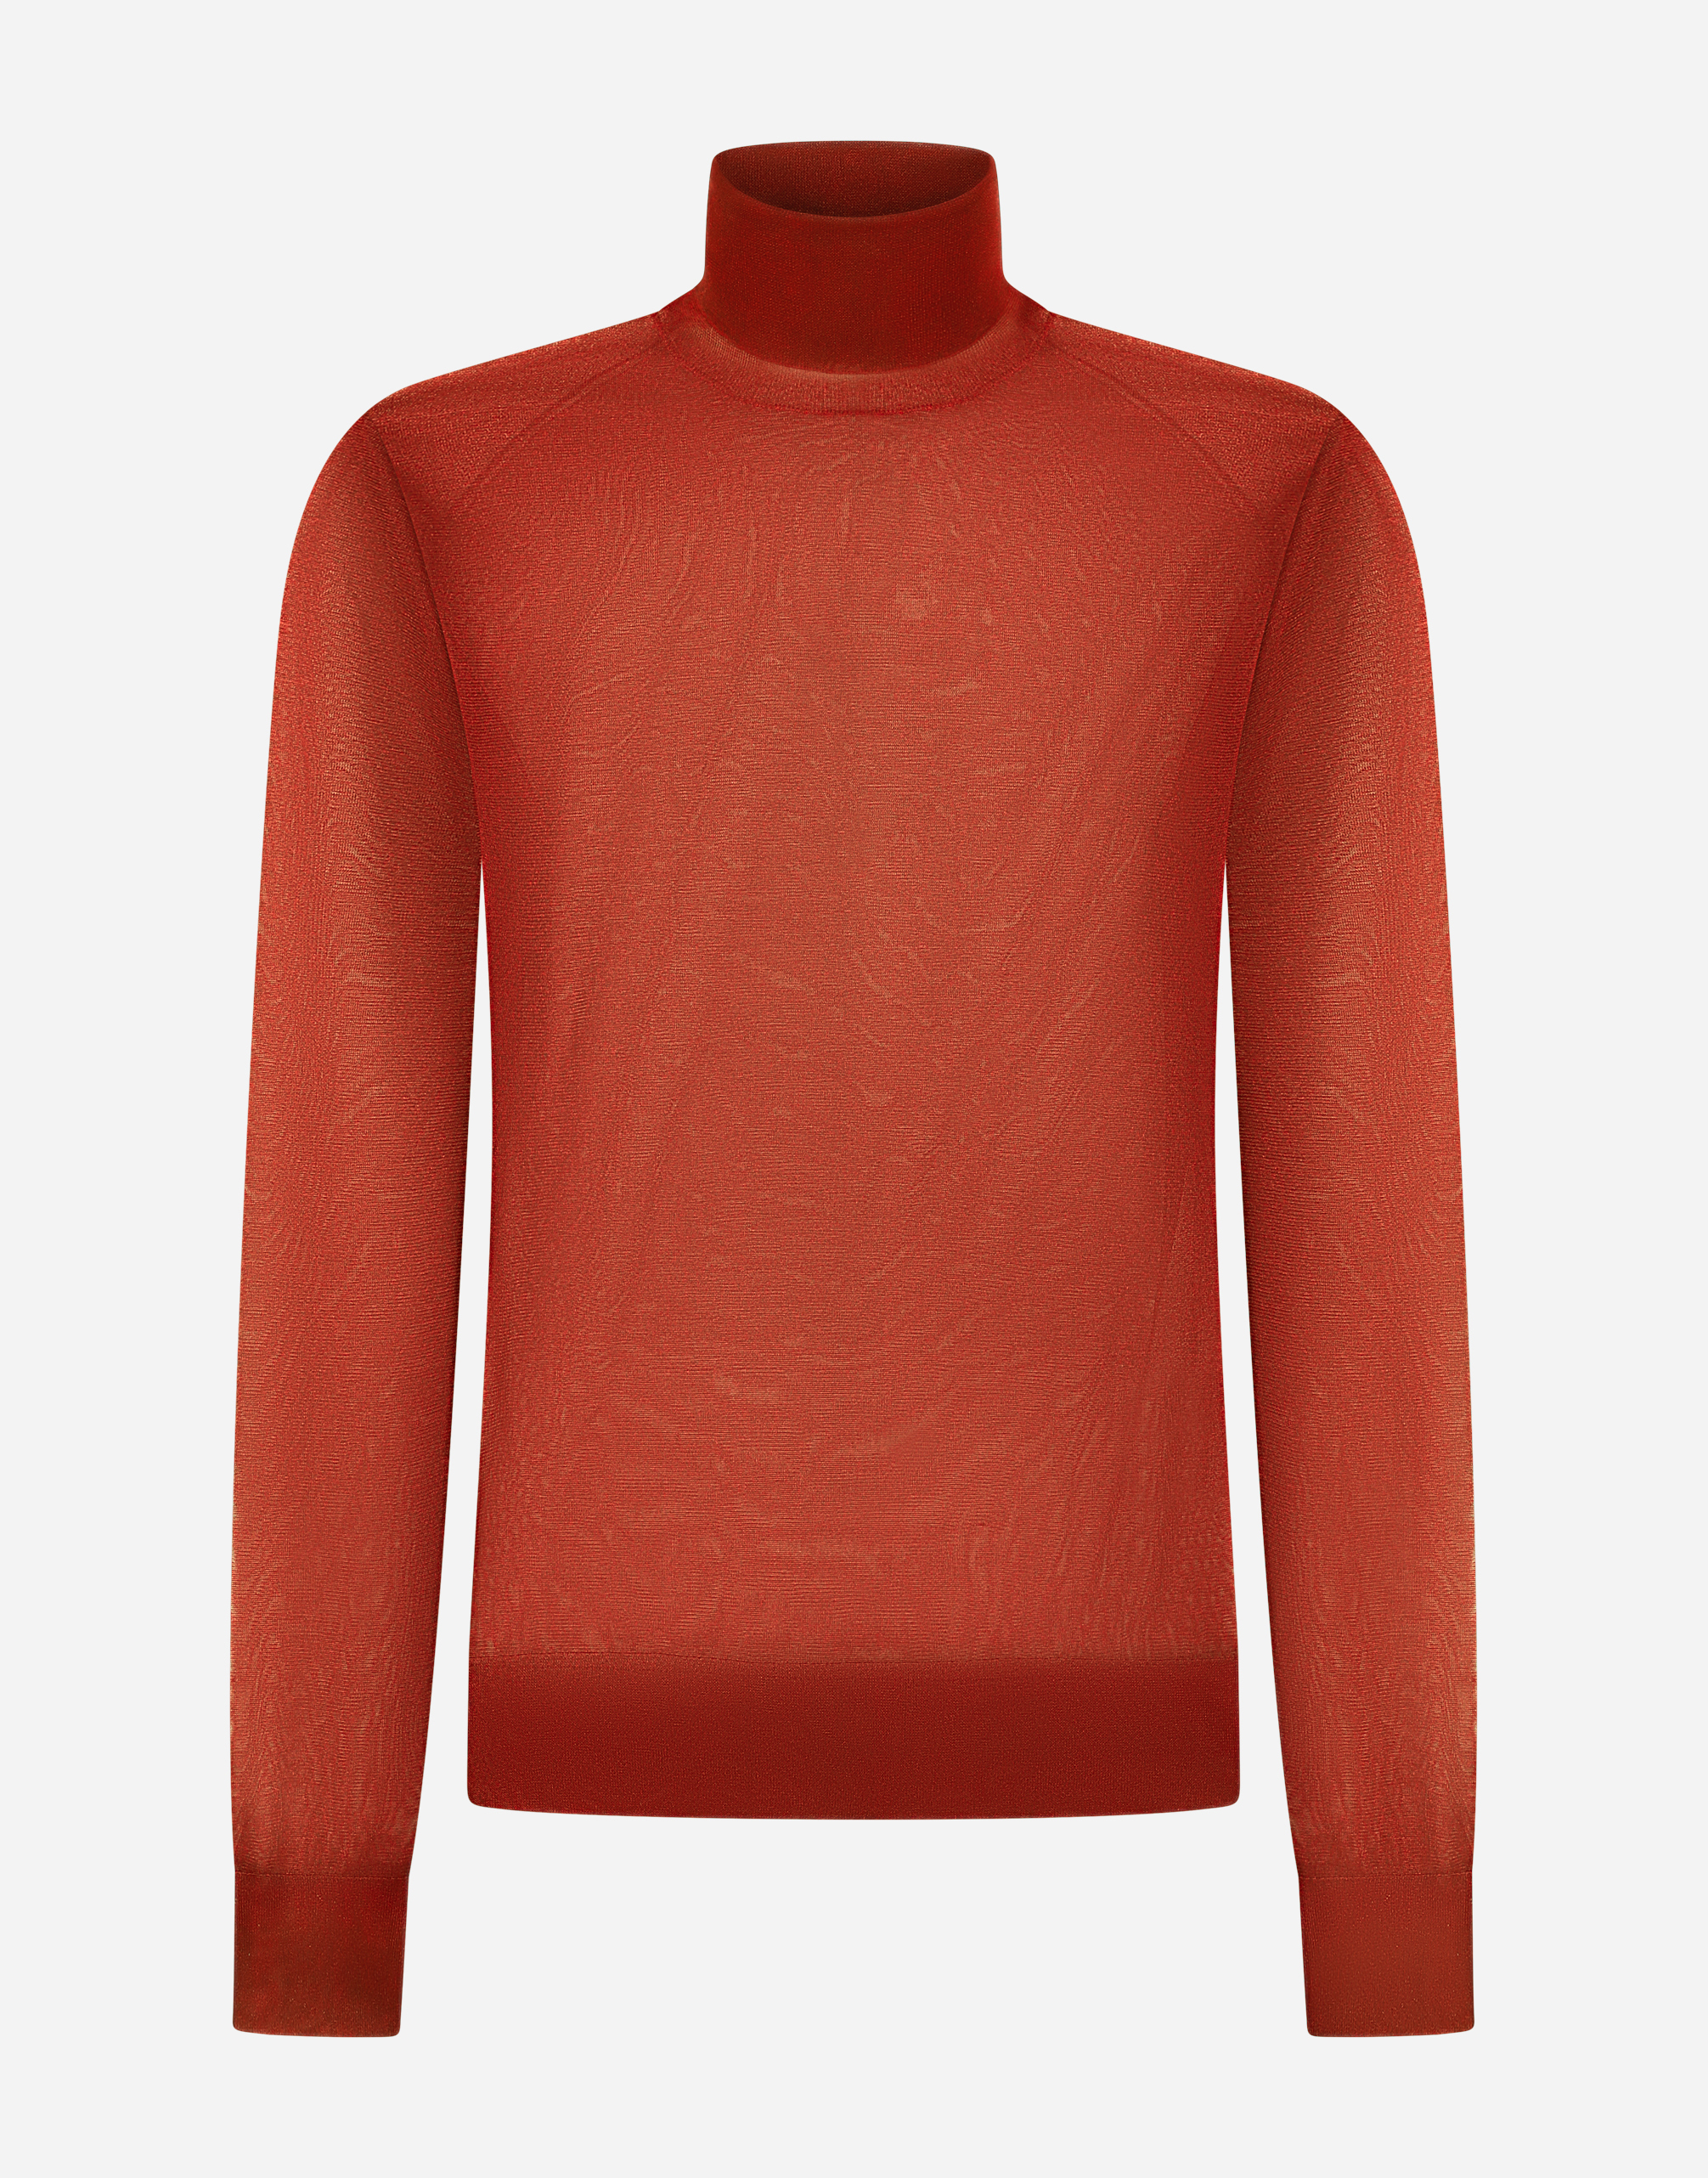 Technical yarn turtle-neck sweater in Orange